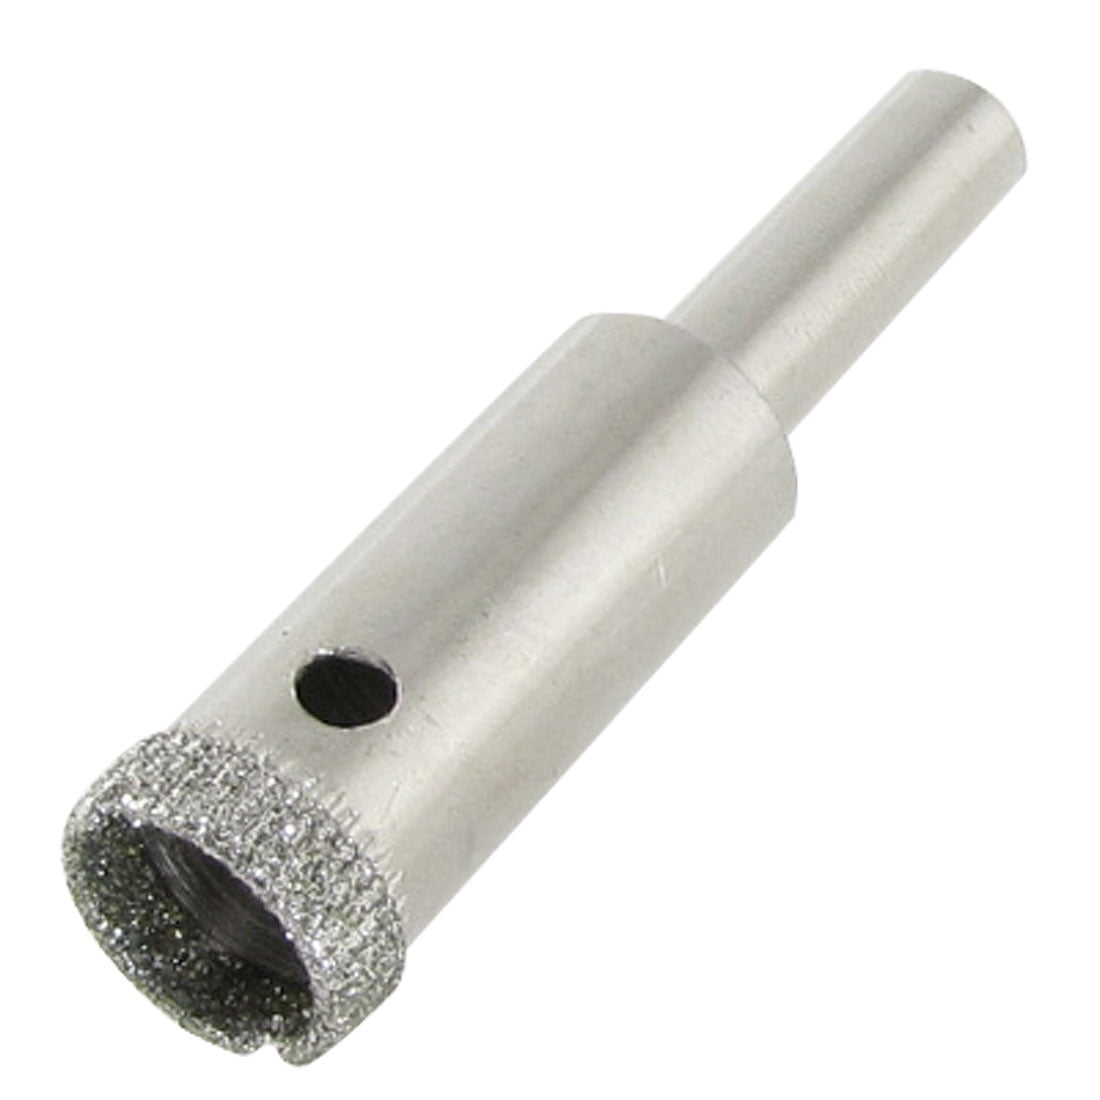 1 pc 120mm 4-3/4" inch THK Diamond coated core drills drill bit hole saw glass 